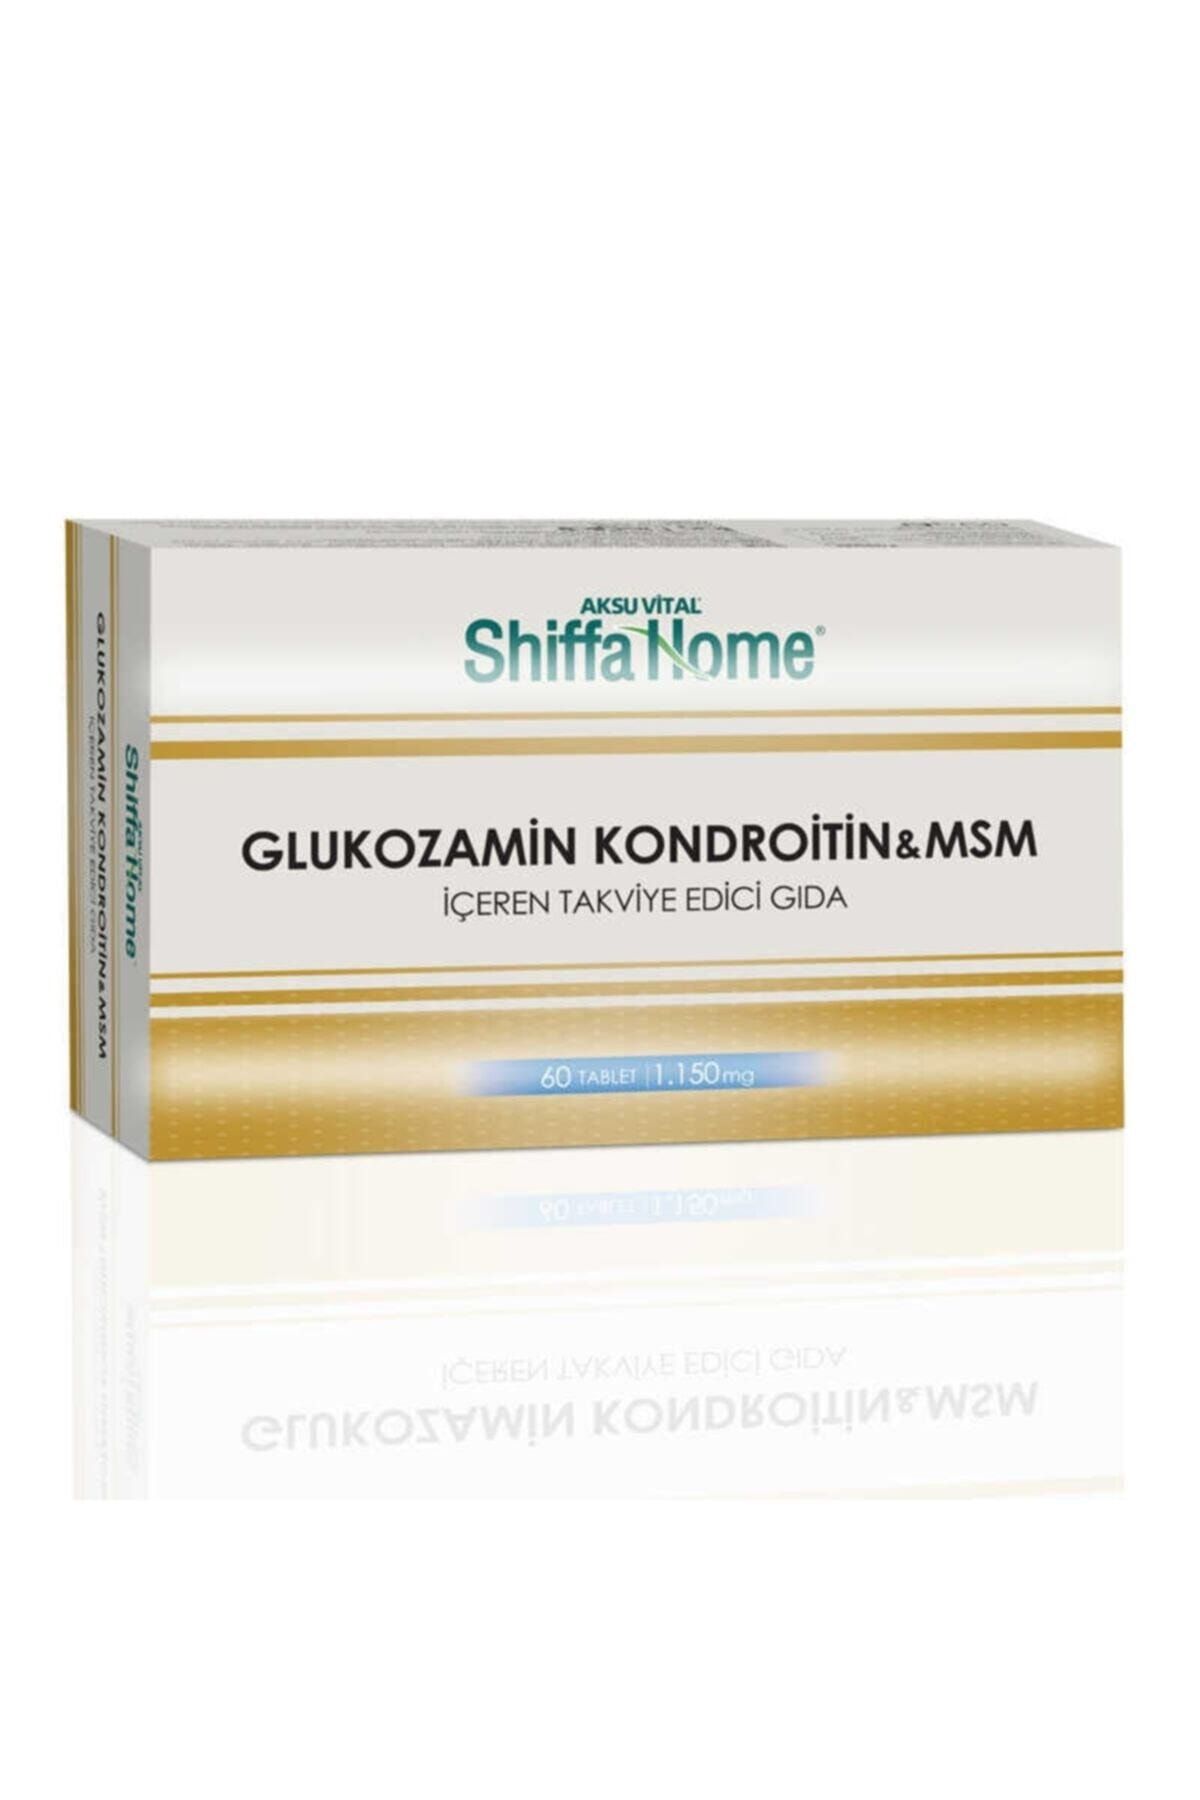 Shiffa Home Glukozamin Kondroitin Msm Tablet 60 Tablet 1150mg